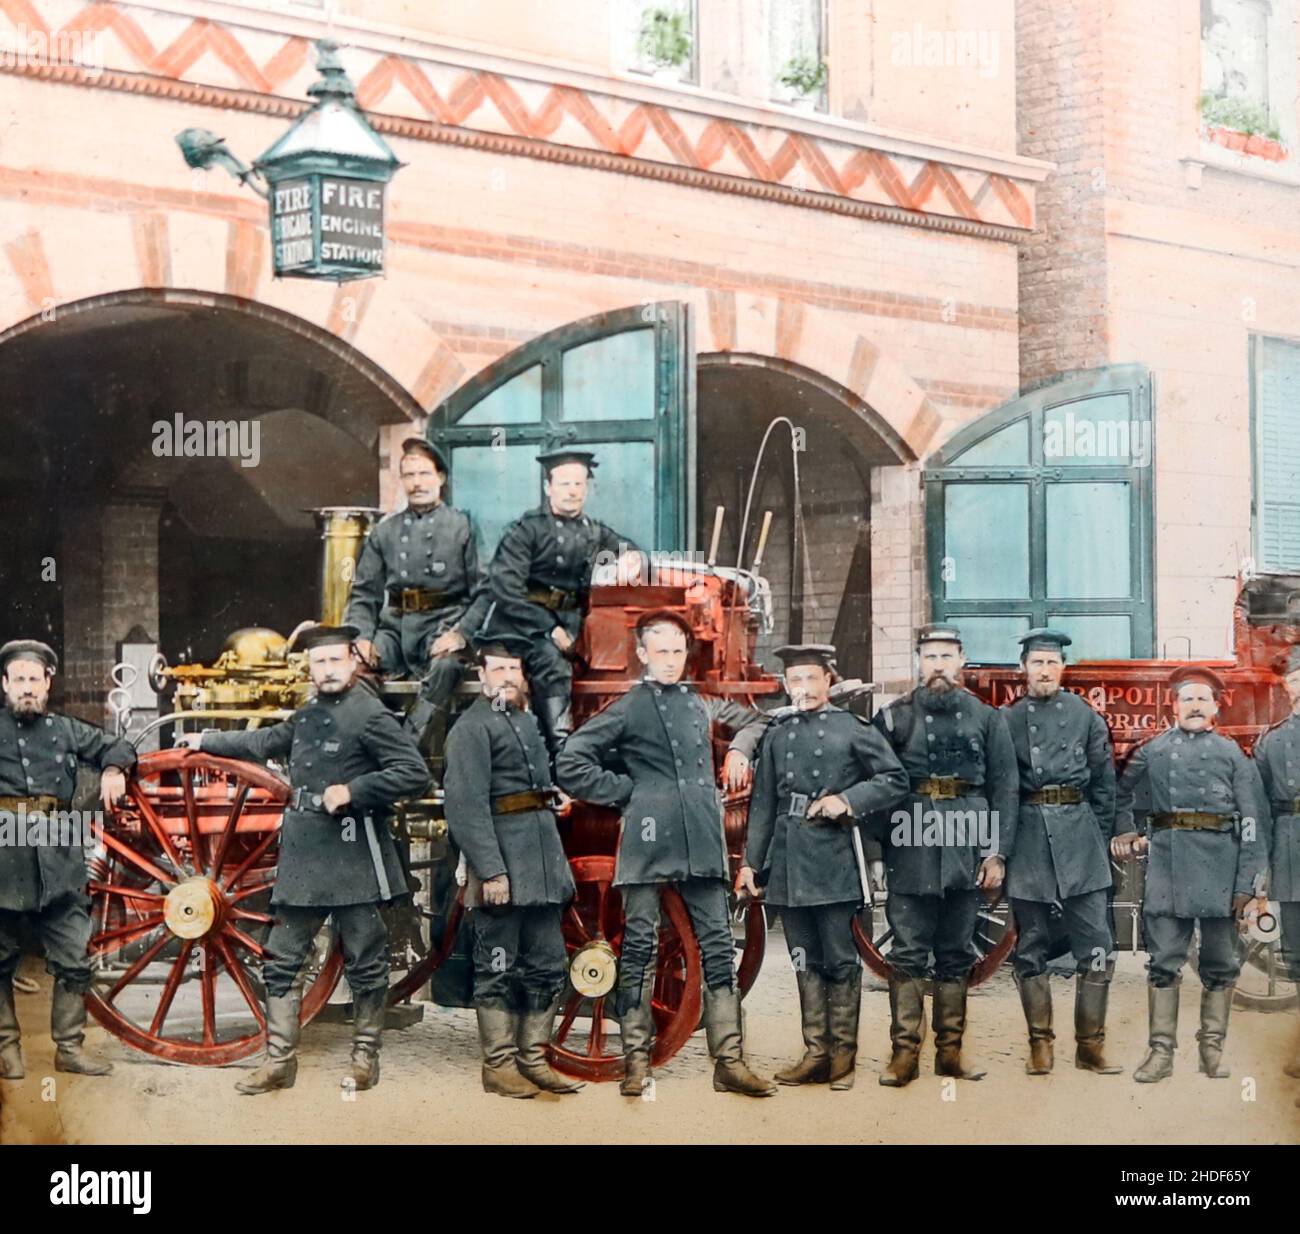 Brigada de Bomberos Metropolitana de Londres, época victoriana Foto de stock